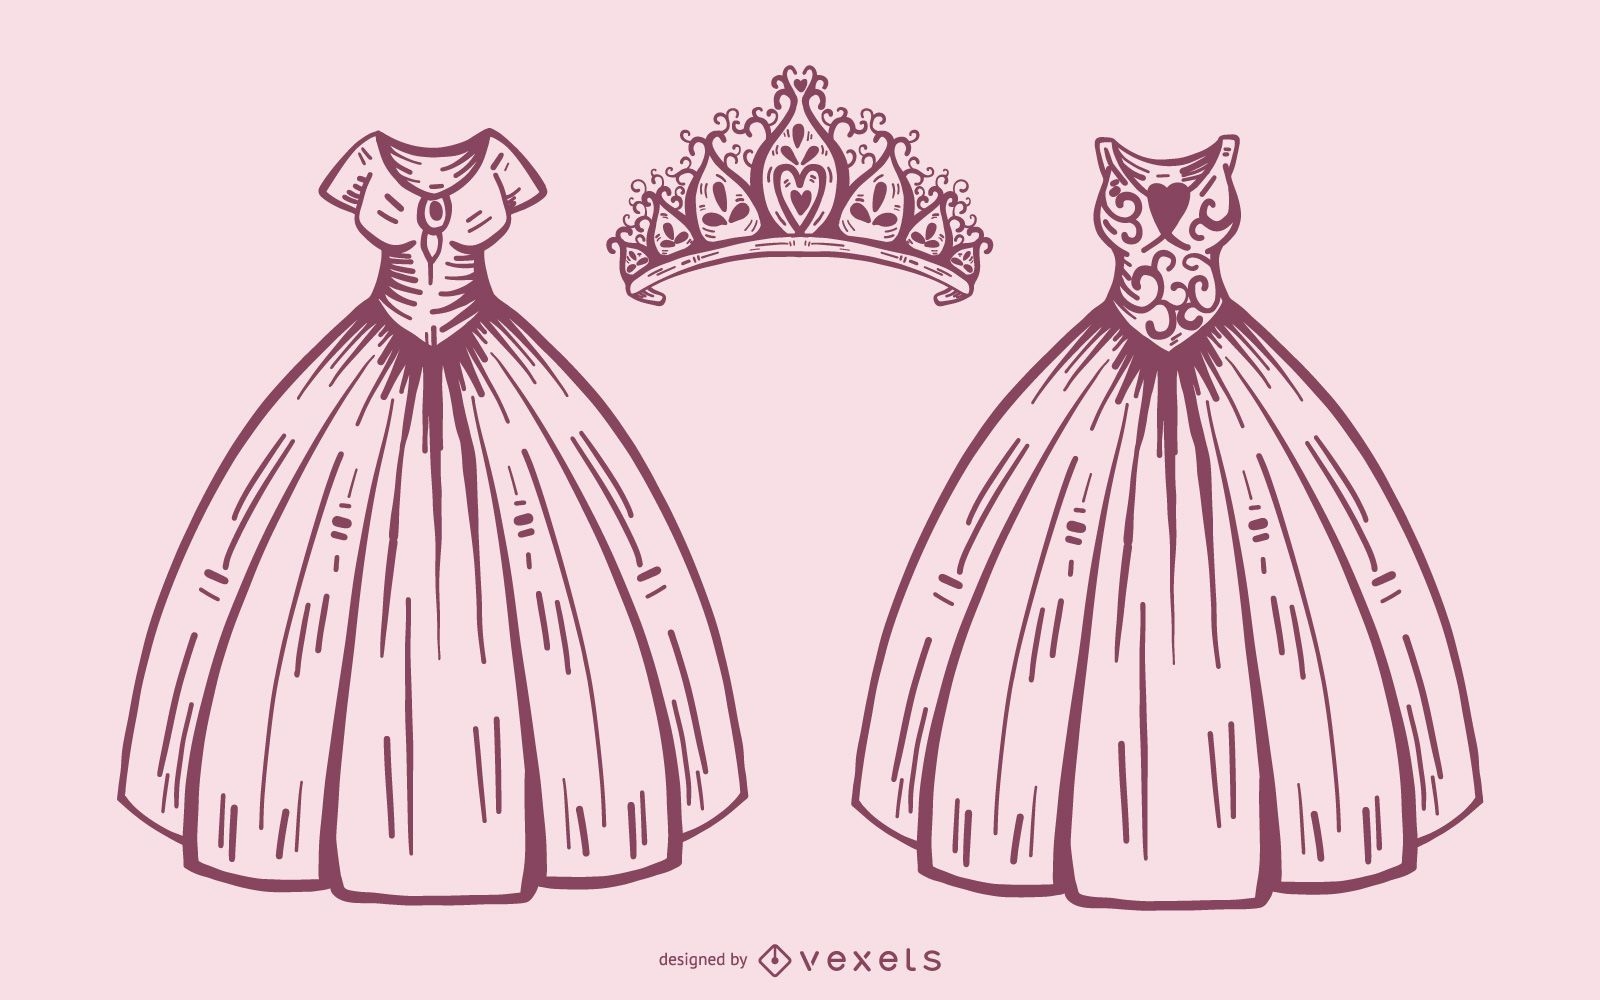 Vestido princesa e conjunto coroa